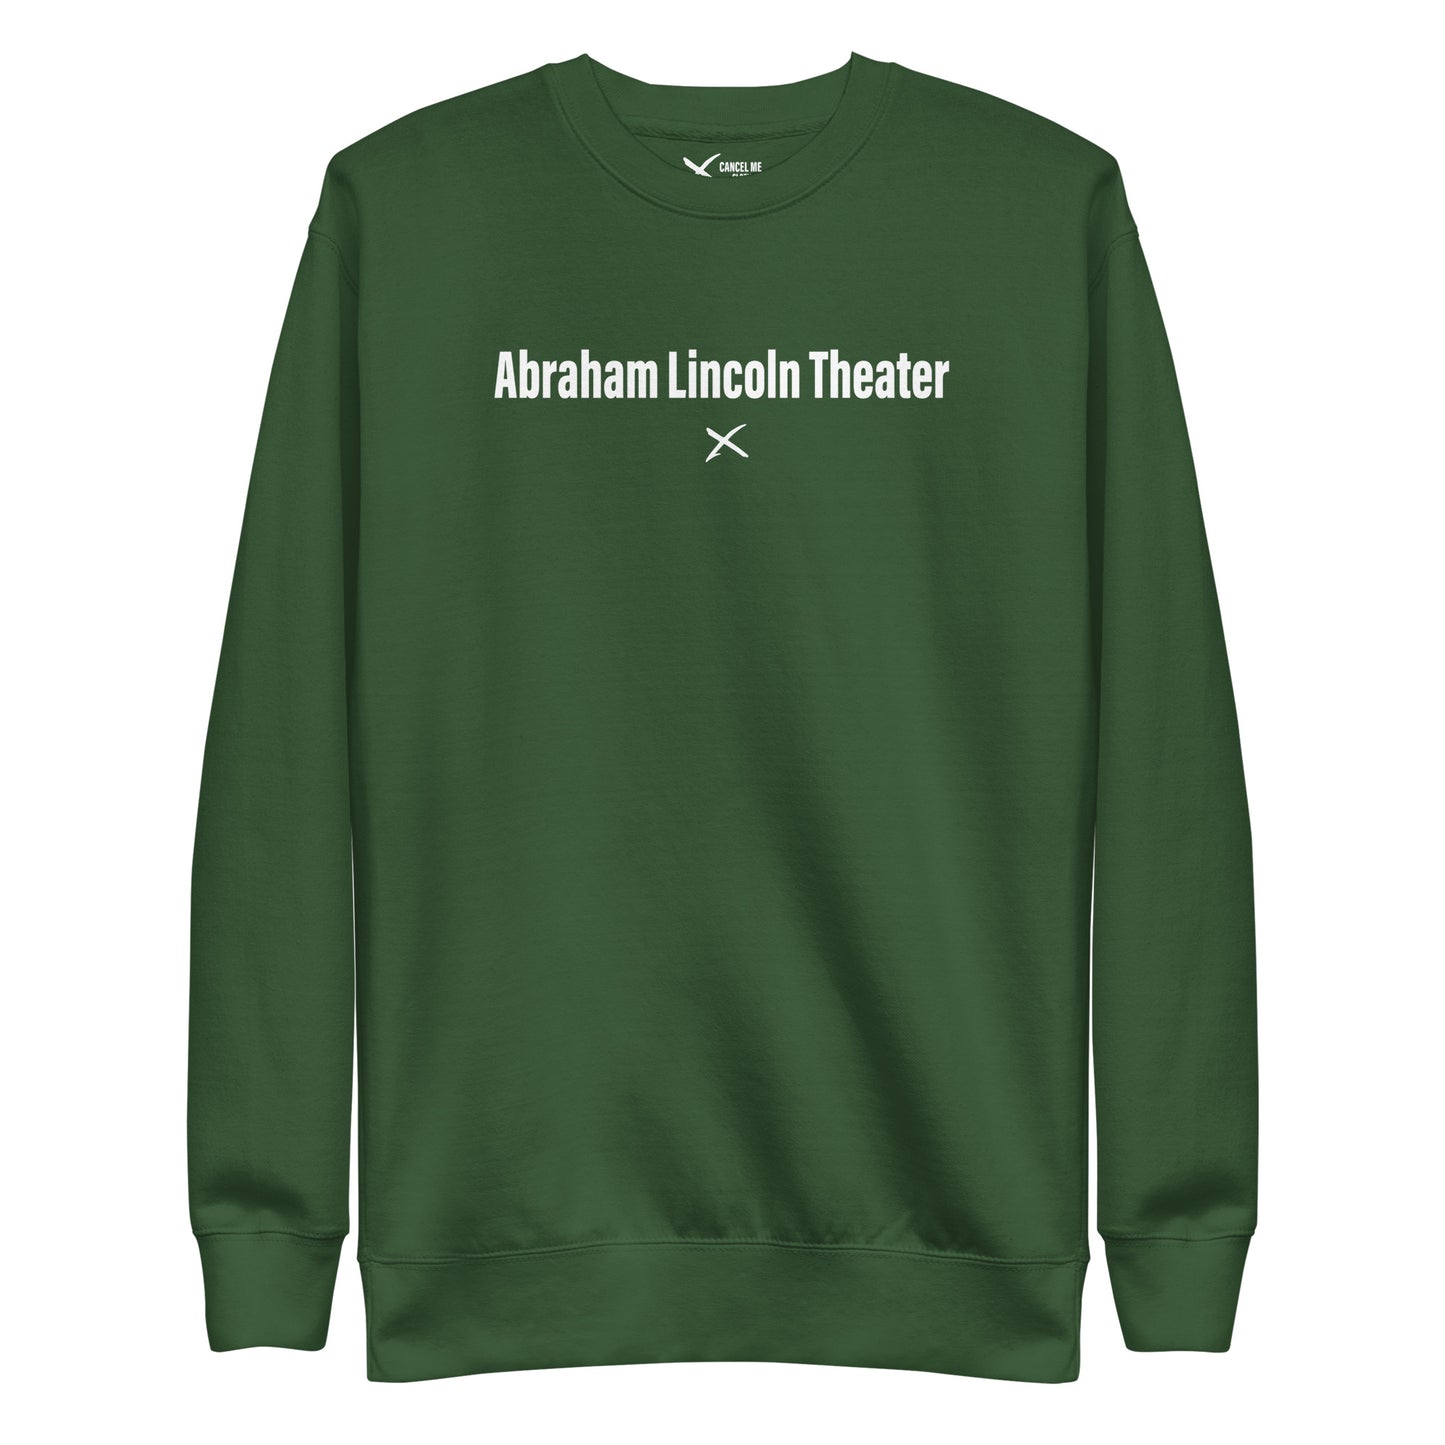 Abraham Lincoln Theater - Sweatshirt